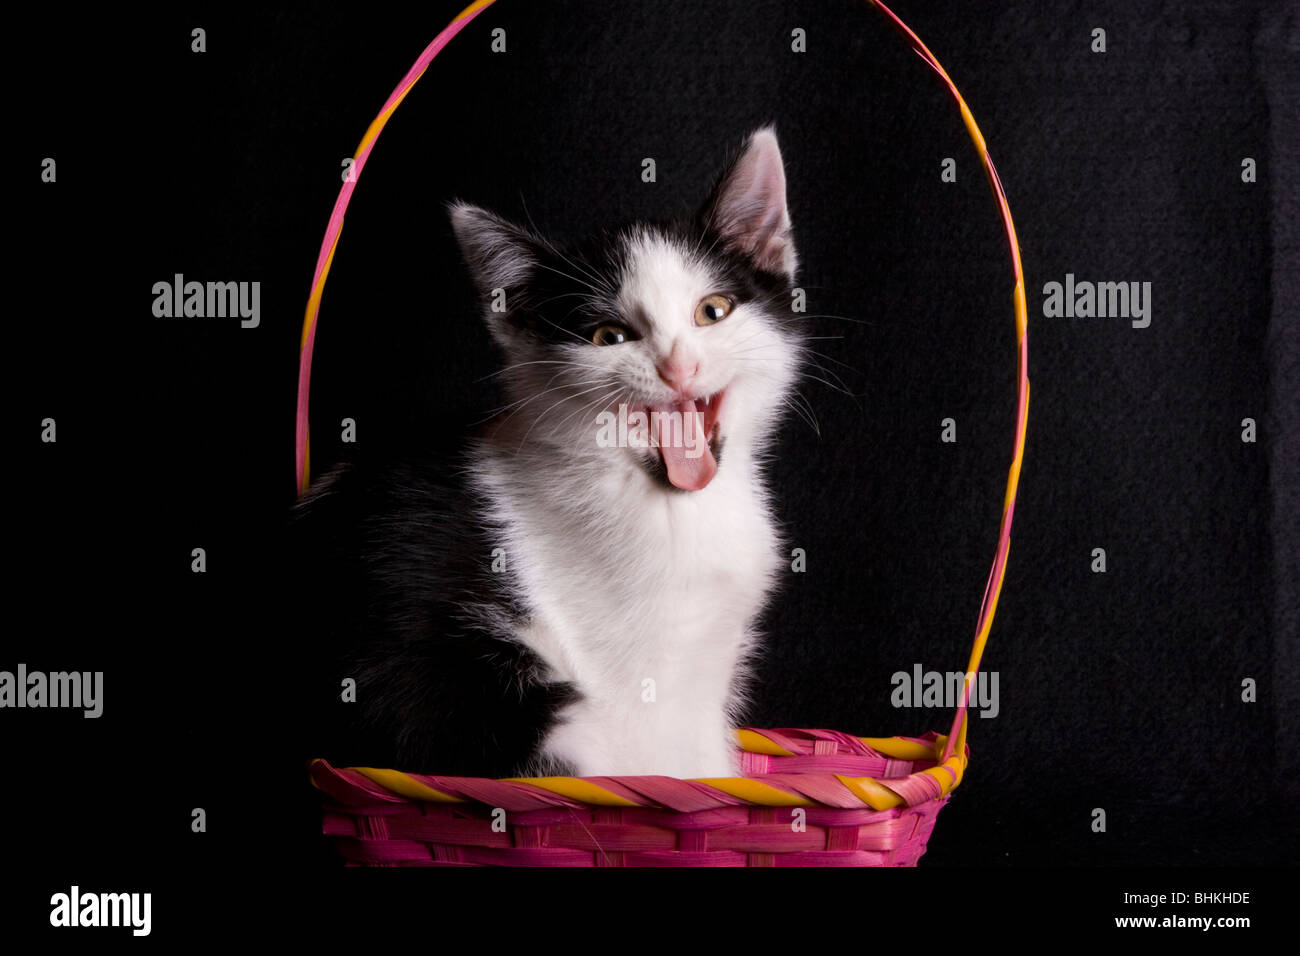 Cat sitting in basket Stock Photo